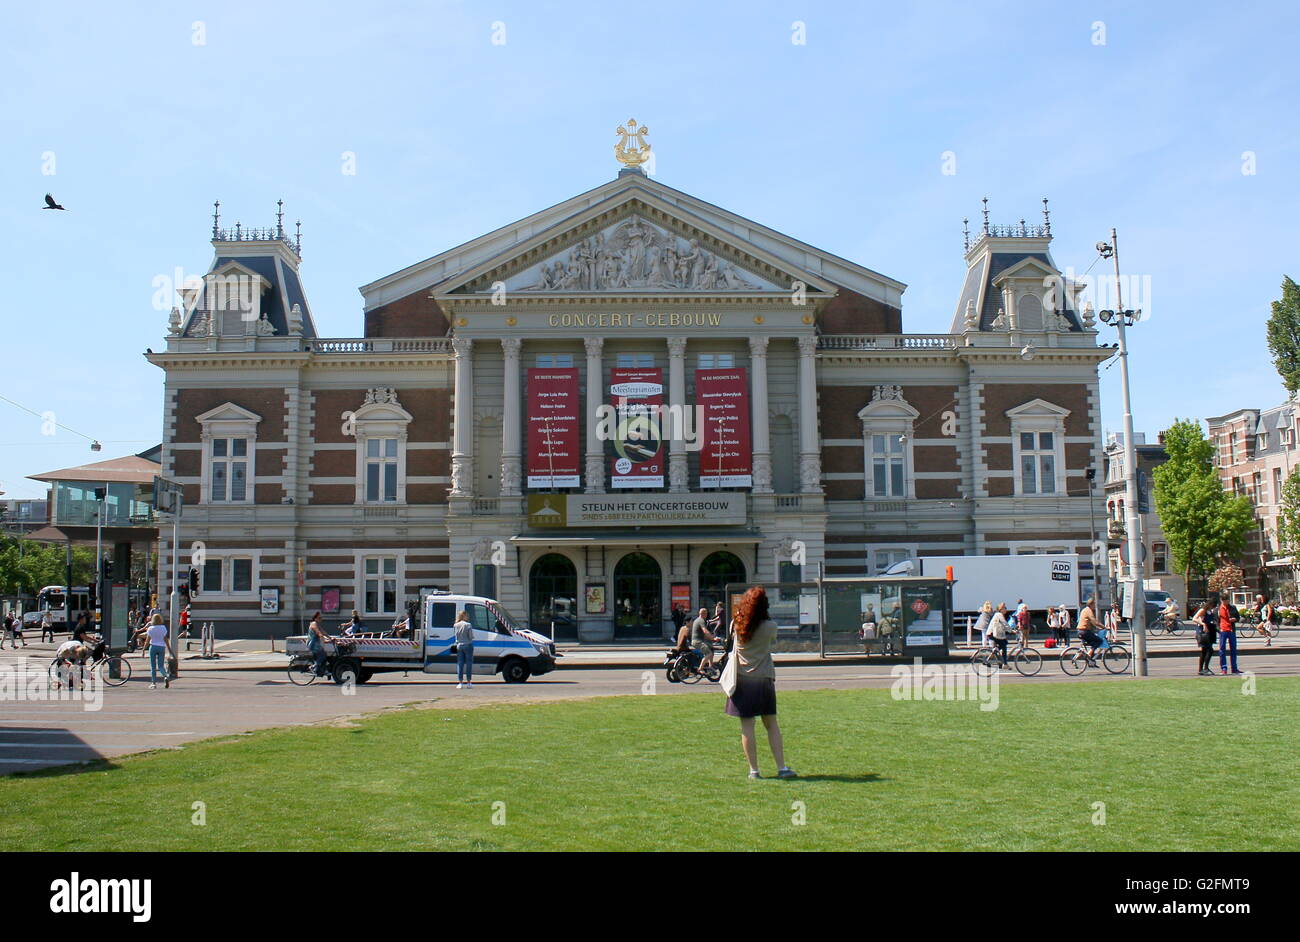 Tourist girl taking a photo of the Koninklijk Concertgebouw (Royal Concert Hall), Museum square,  Amsterdam, Netherlands. Stock Photo